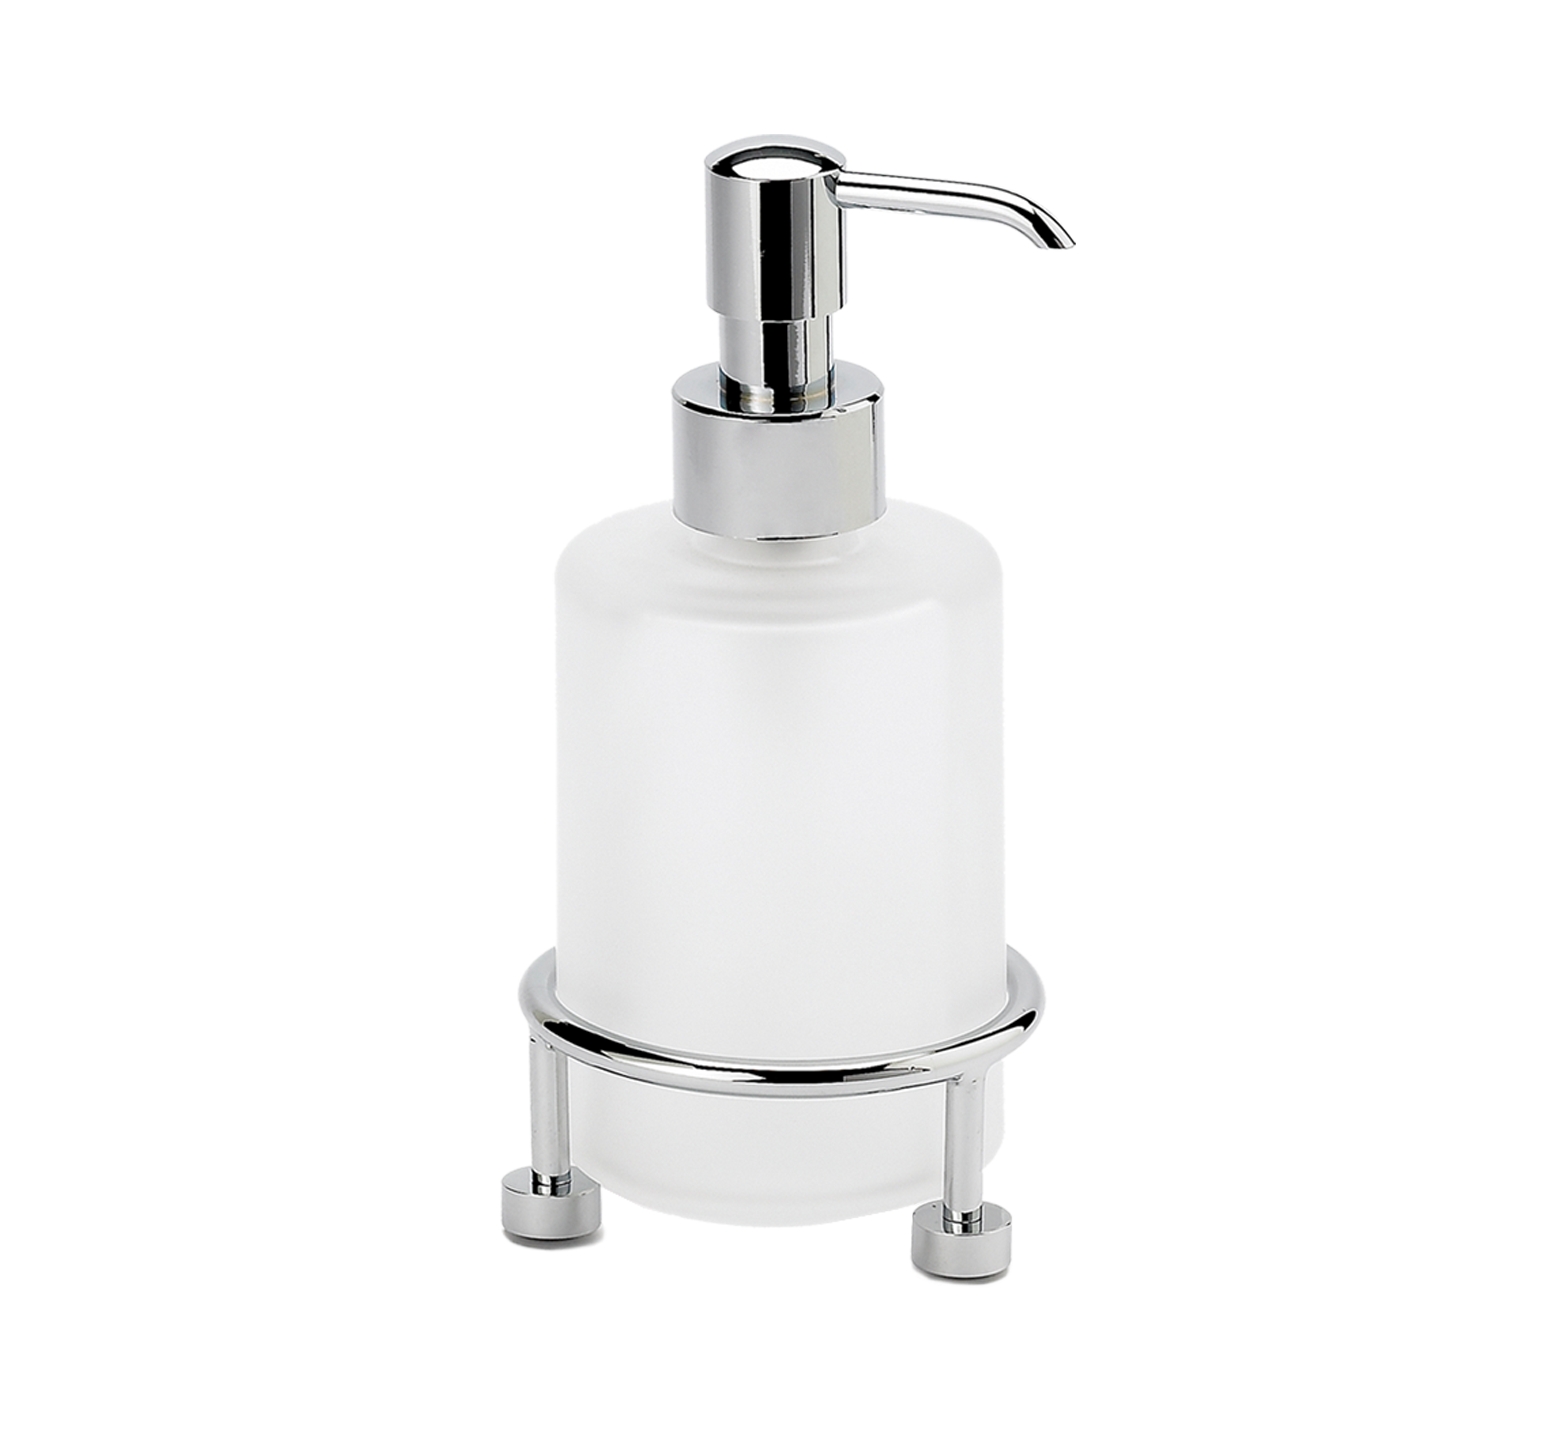 Bath sink soap dispenser - MINIMAL LINE